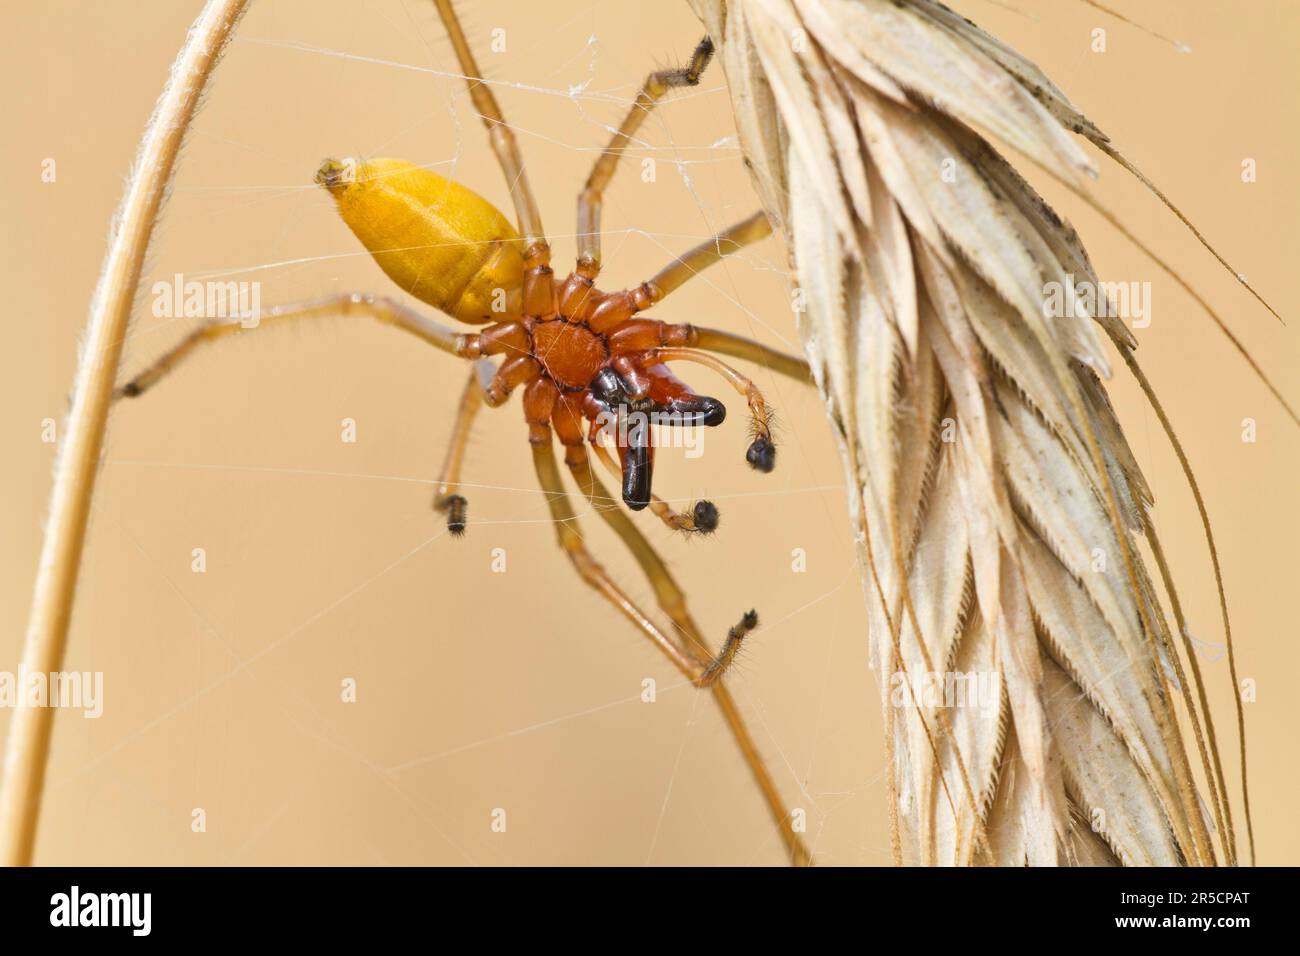 Yellow sac spider (Cheiracanthium punctorium) male, Havelland, Brandenburg, Germany Stock Photo